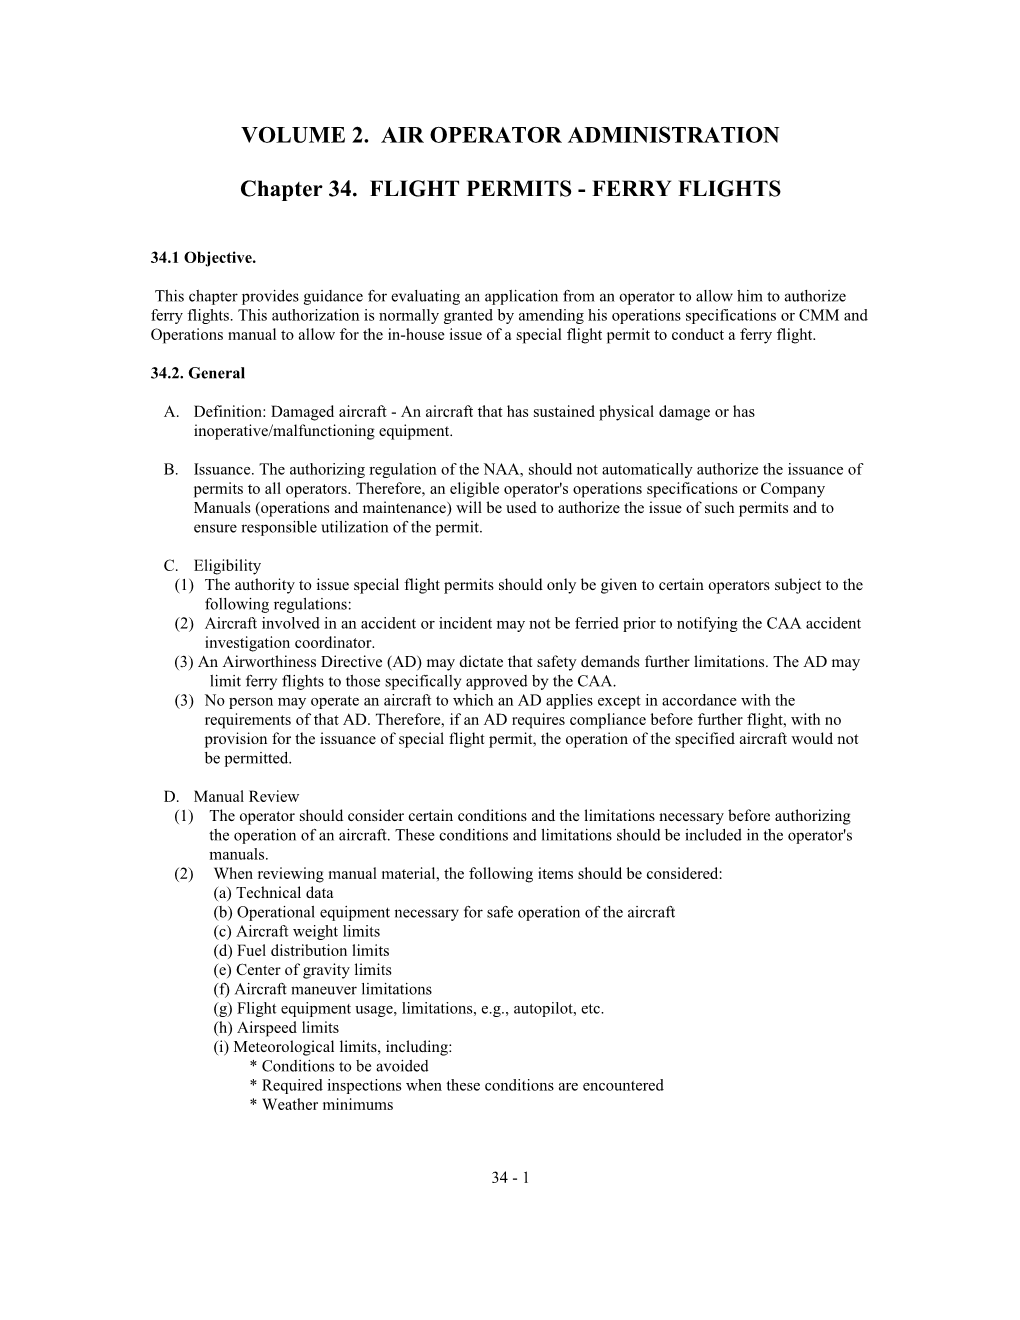 FLIGHT Permits - FERRY FLIGHTS